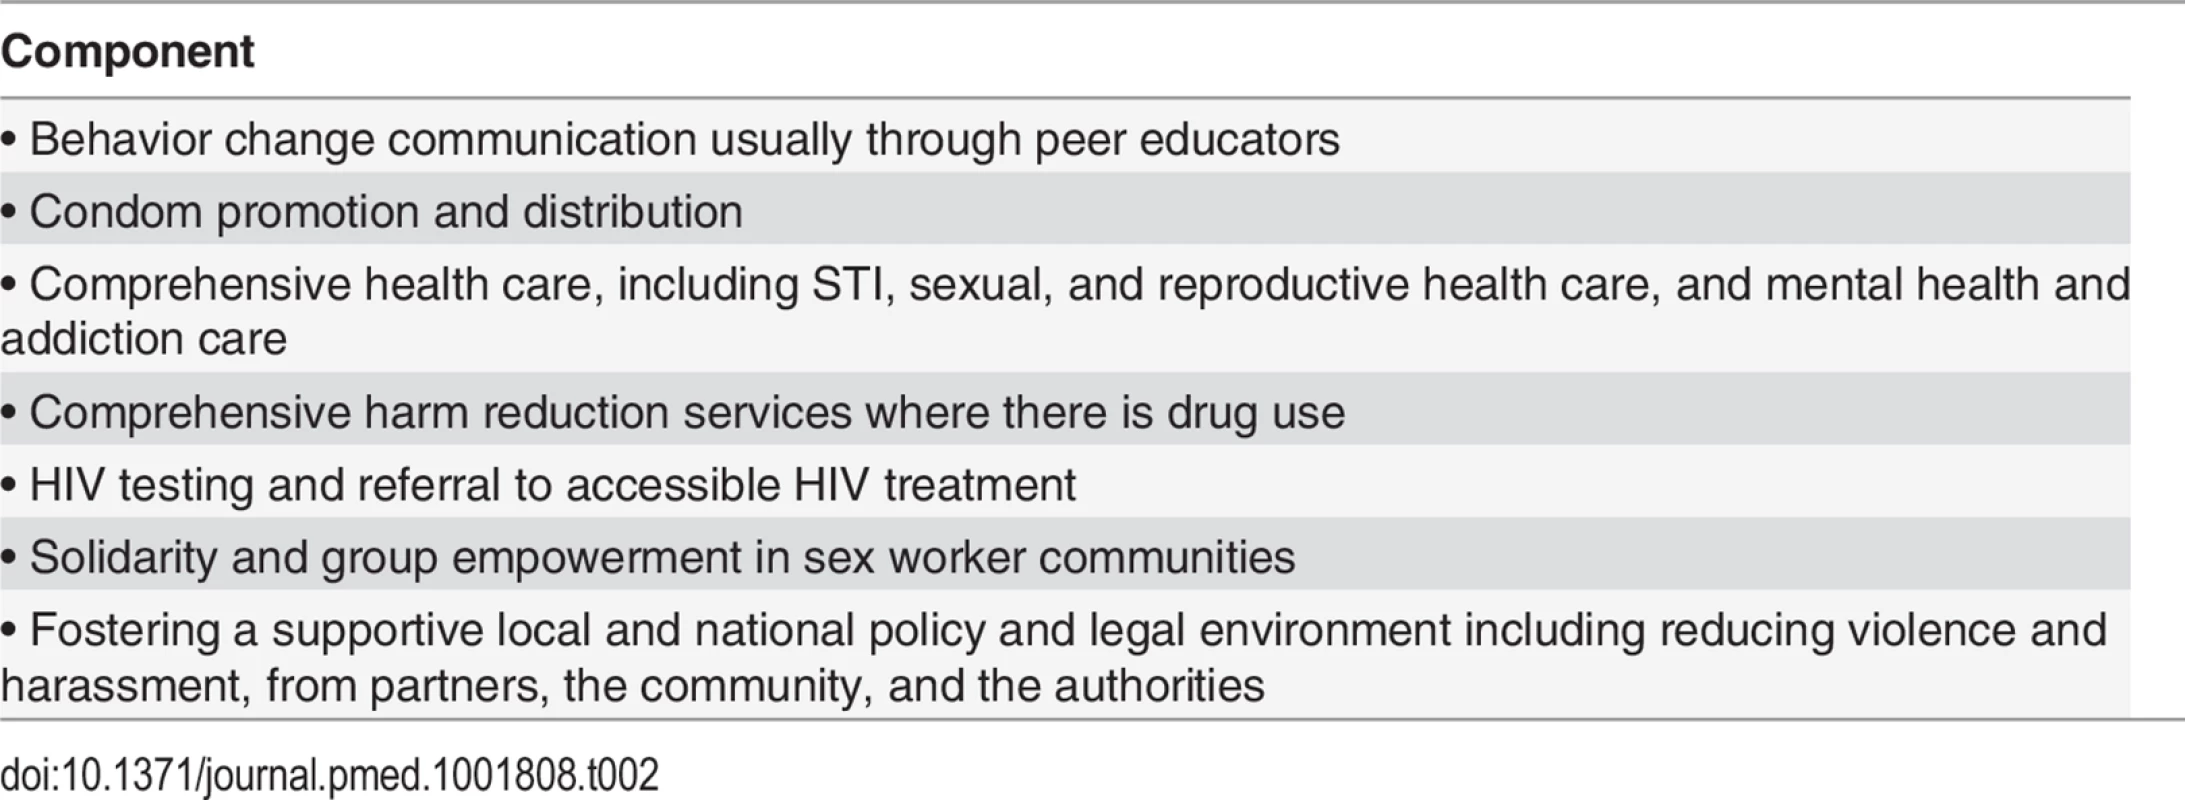 Components of a comprehensive sex worker HIV prevention program.